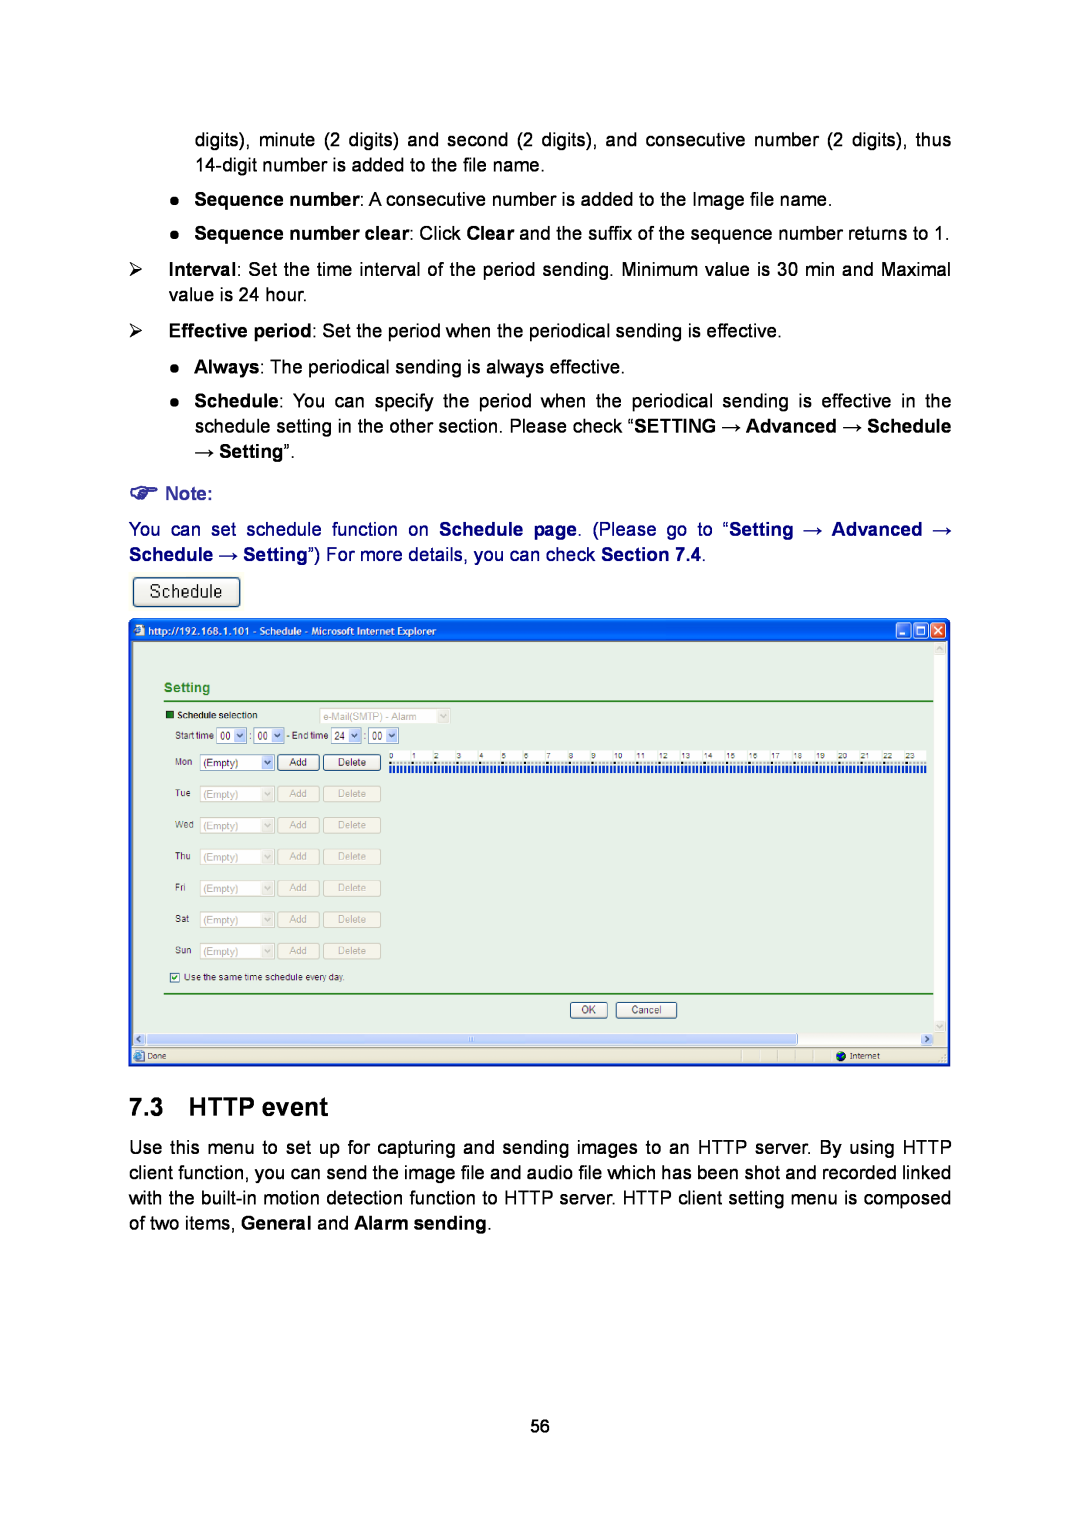 TP-Link TL-SC3130G manual HTTP event, → Setting” 